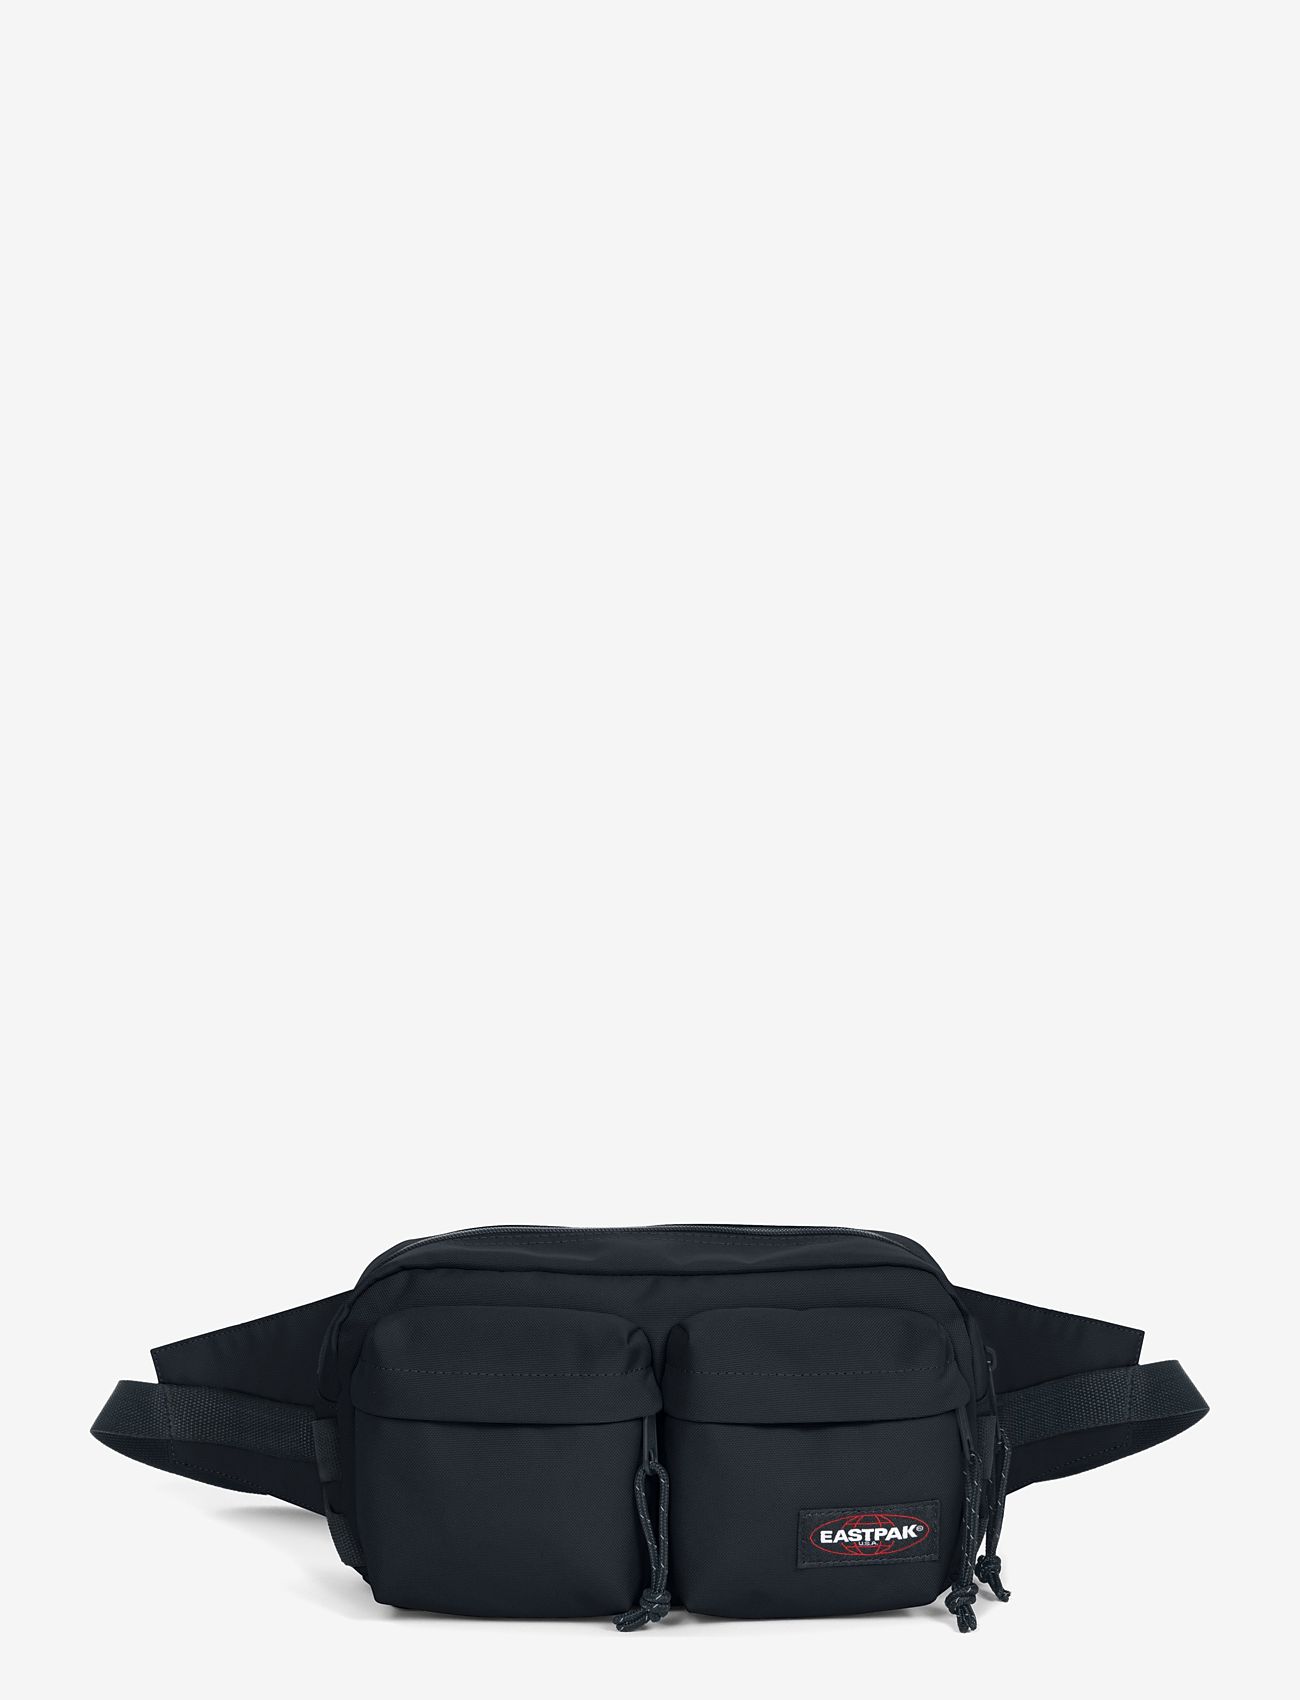 Cloud Navy One Size Eastpak Bumbag Double Bag Bum 